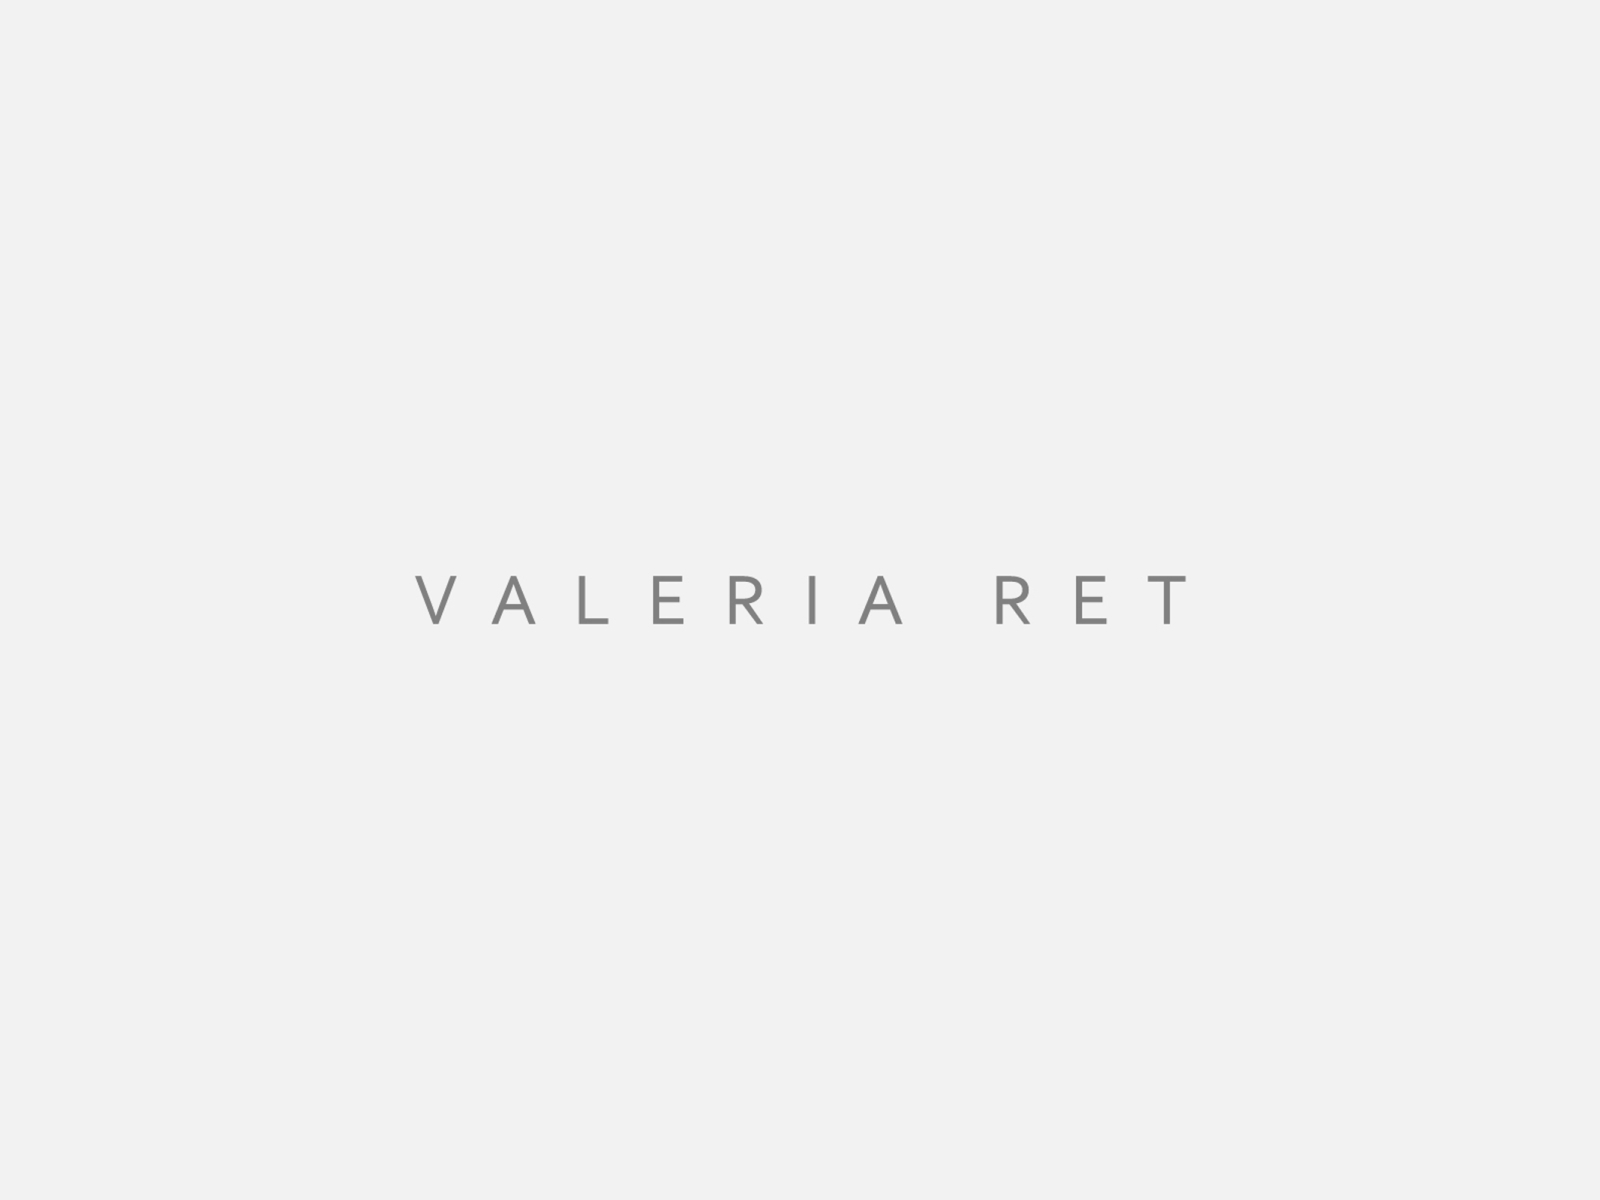 Valeria Ret by G&A studio on Dribbble